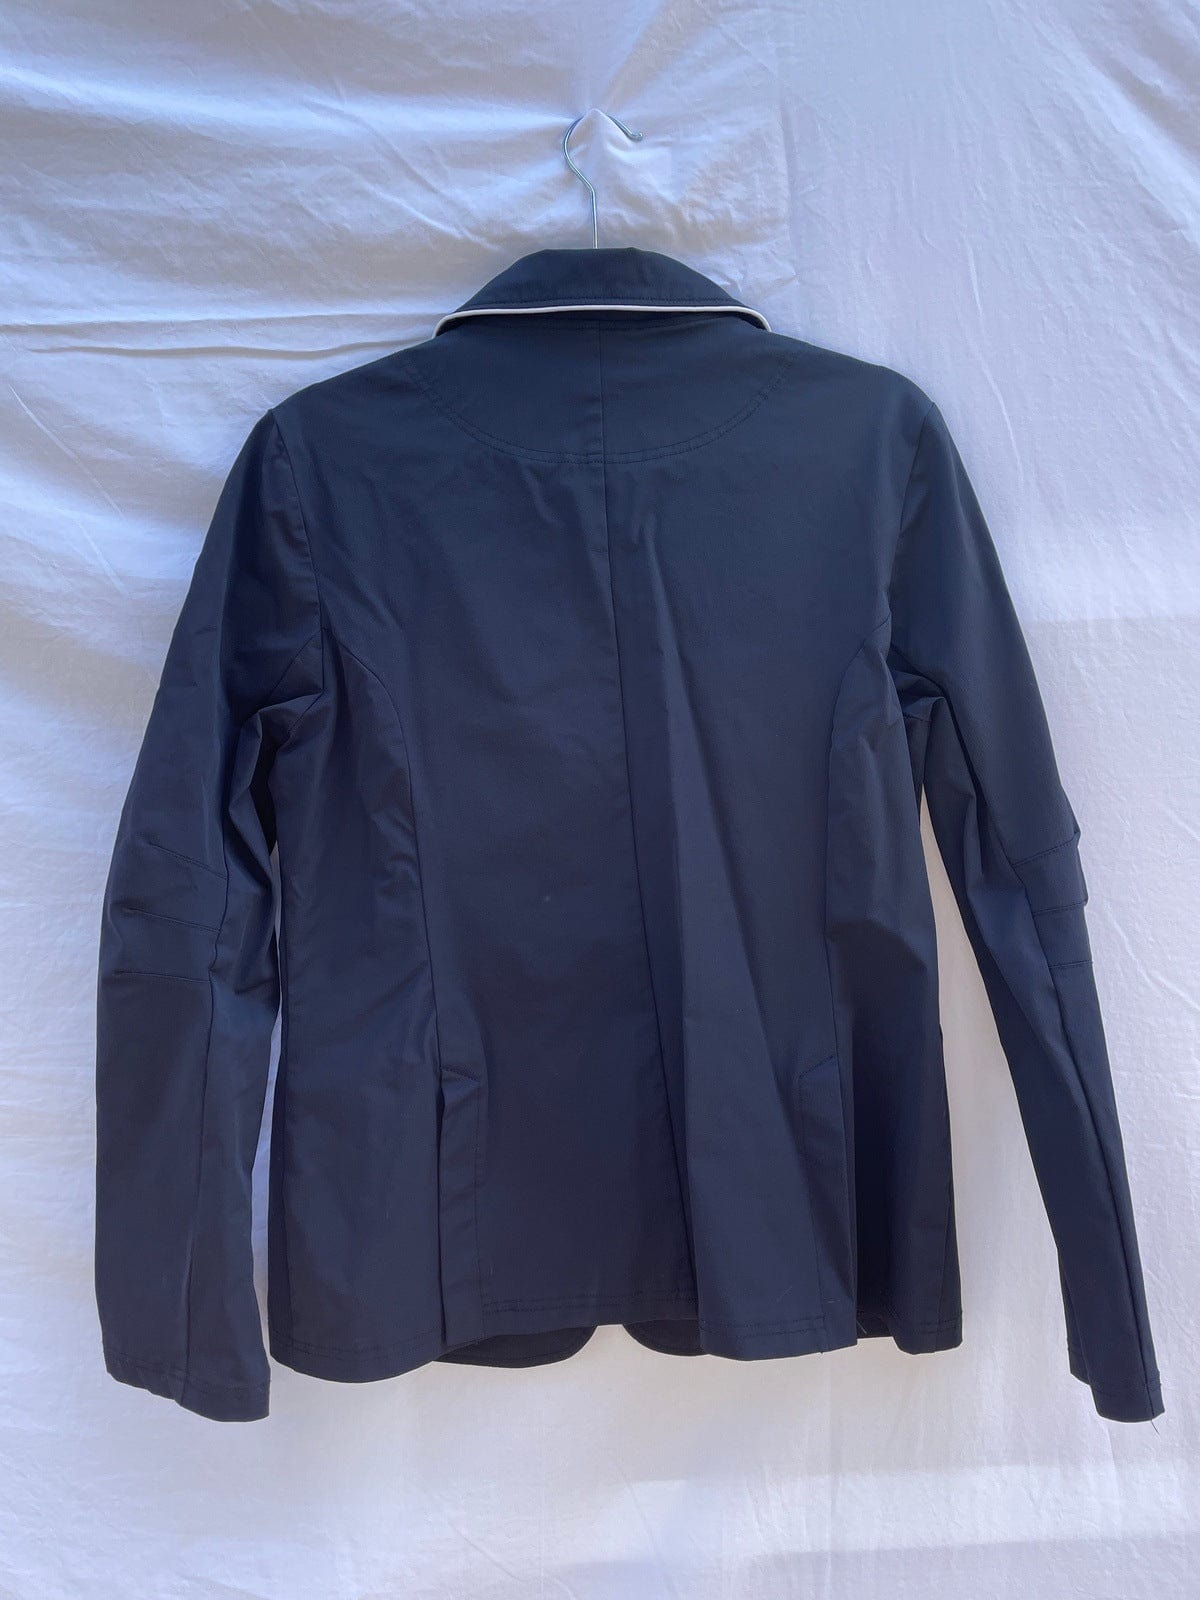 ThriftedEquestrian Clothing 42 EquiTheme Show Jacket - Size 42